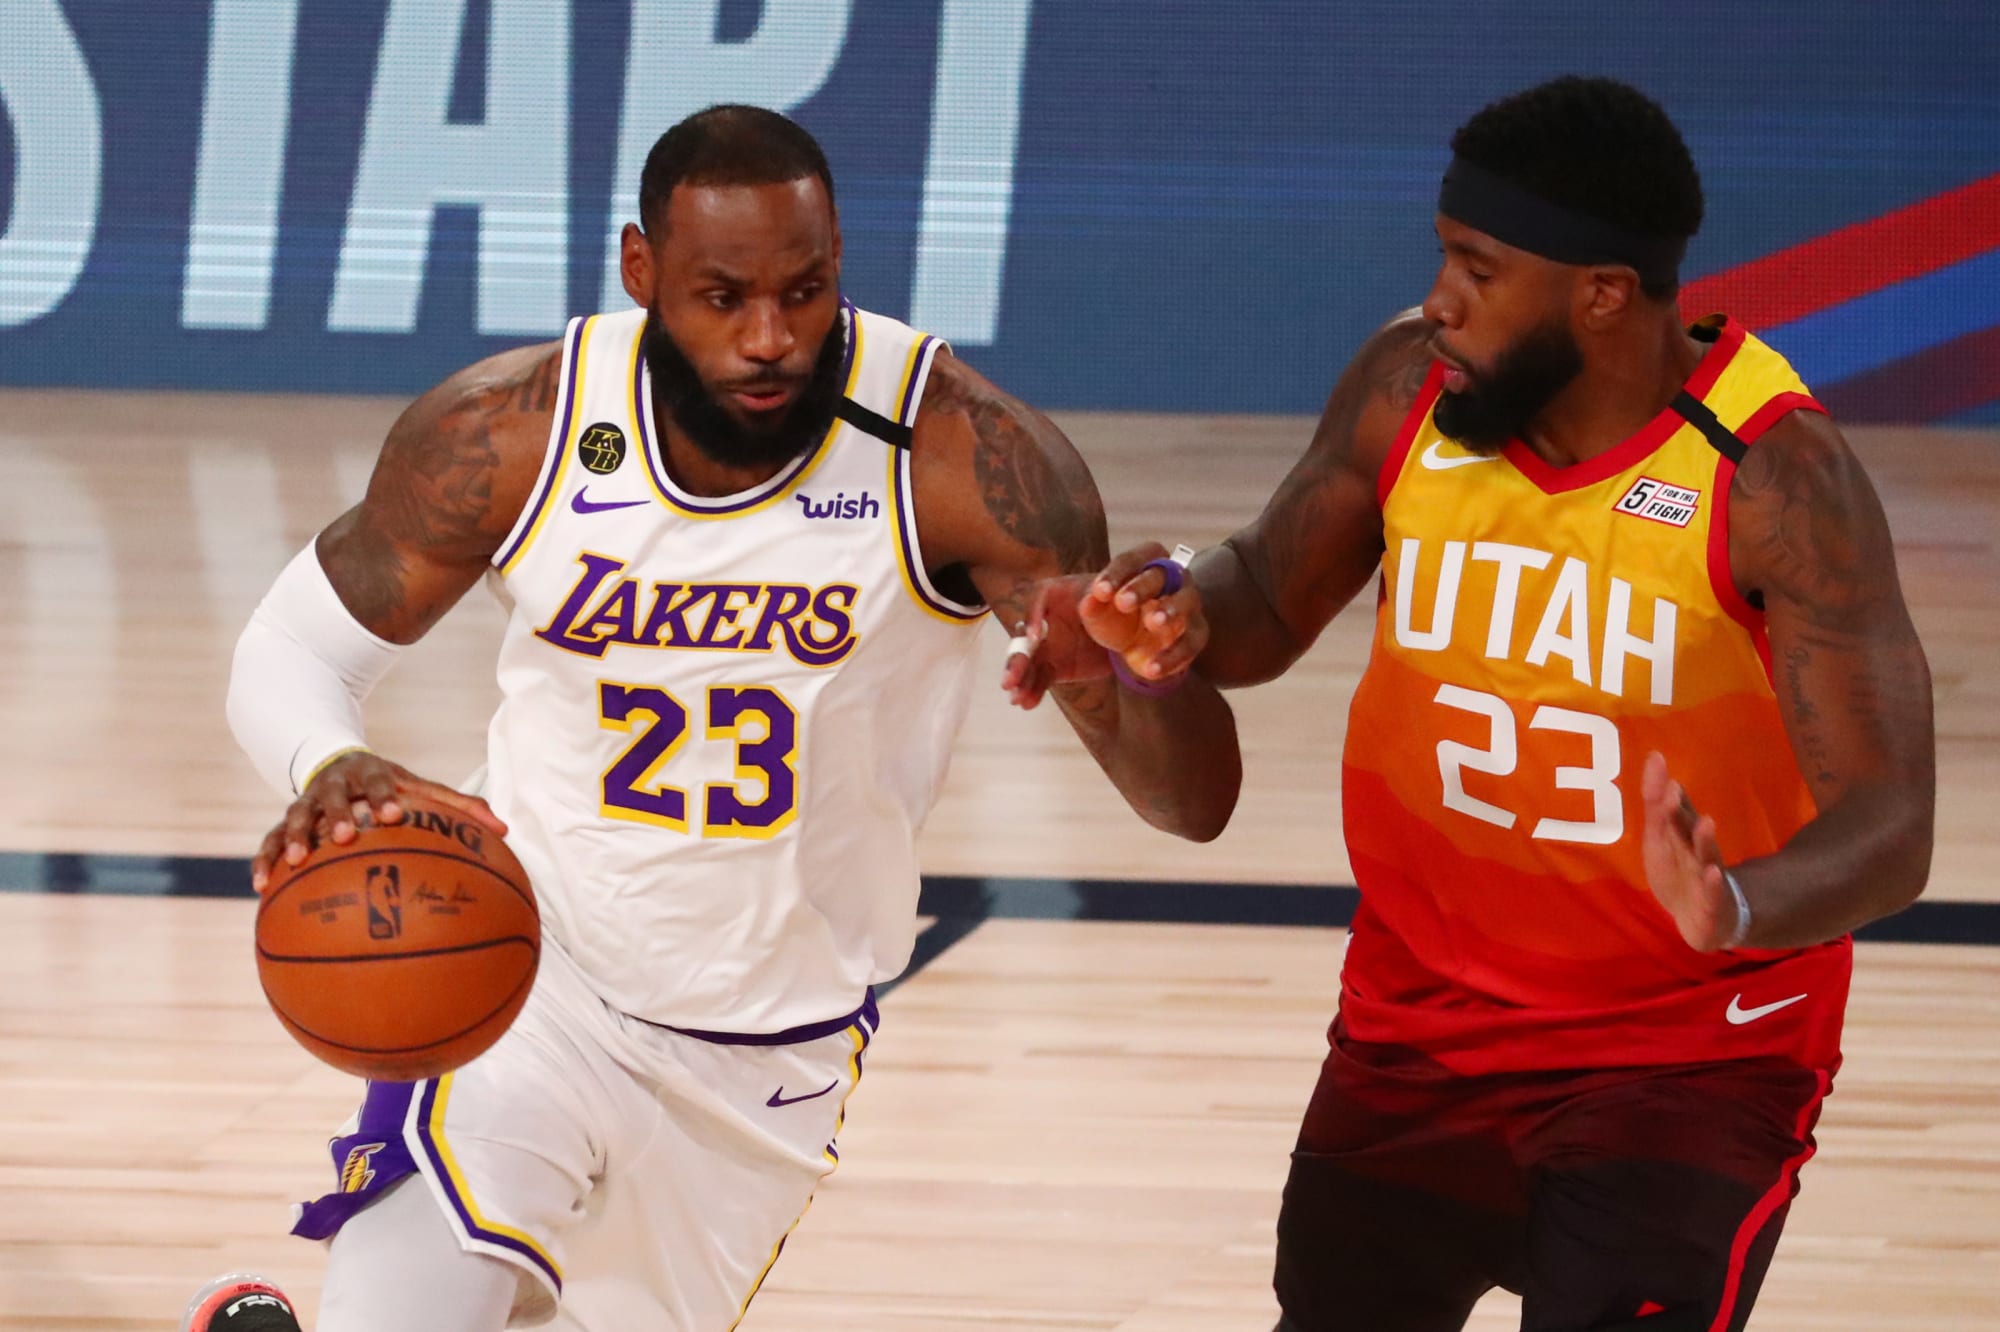 Lakers vs. Jazz NBA live stream reddit for Feb. 24